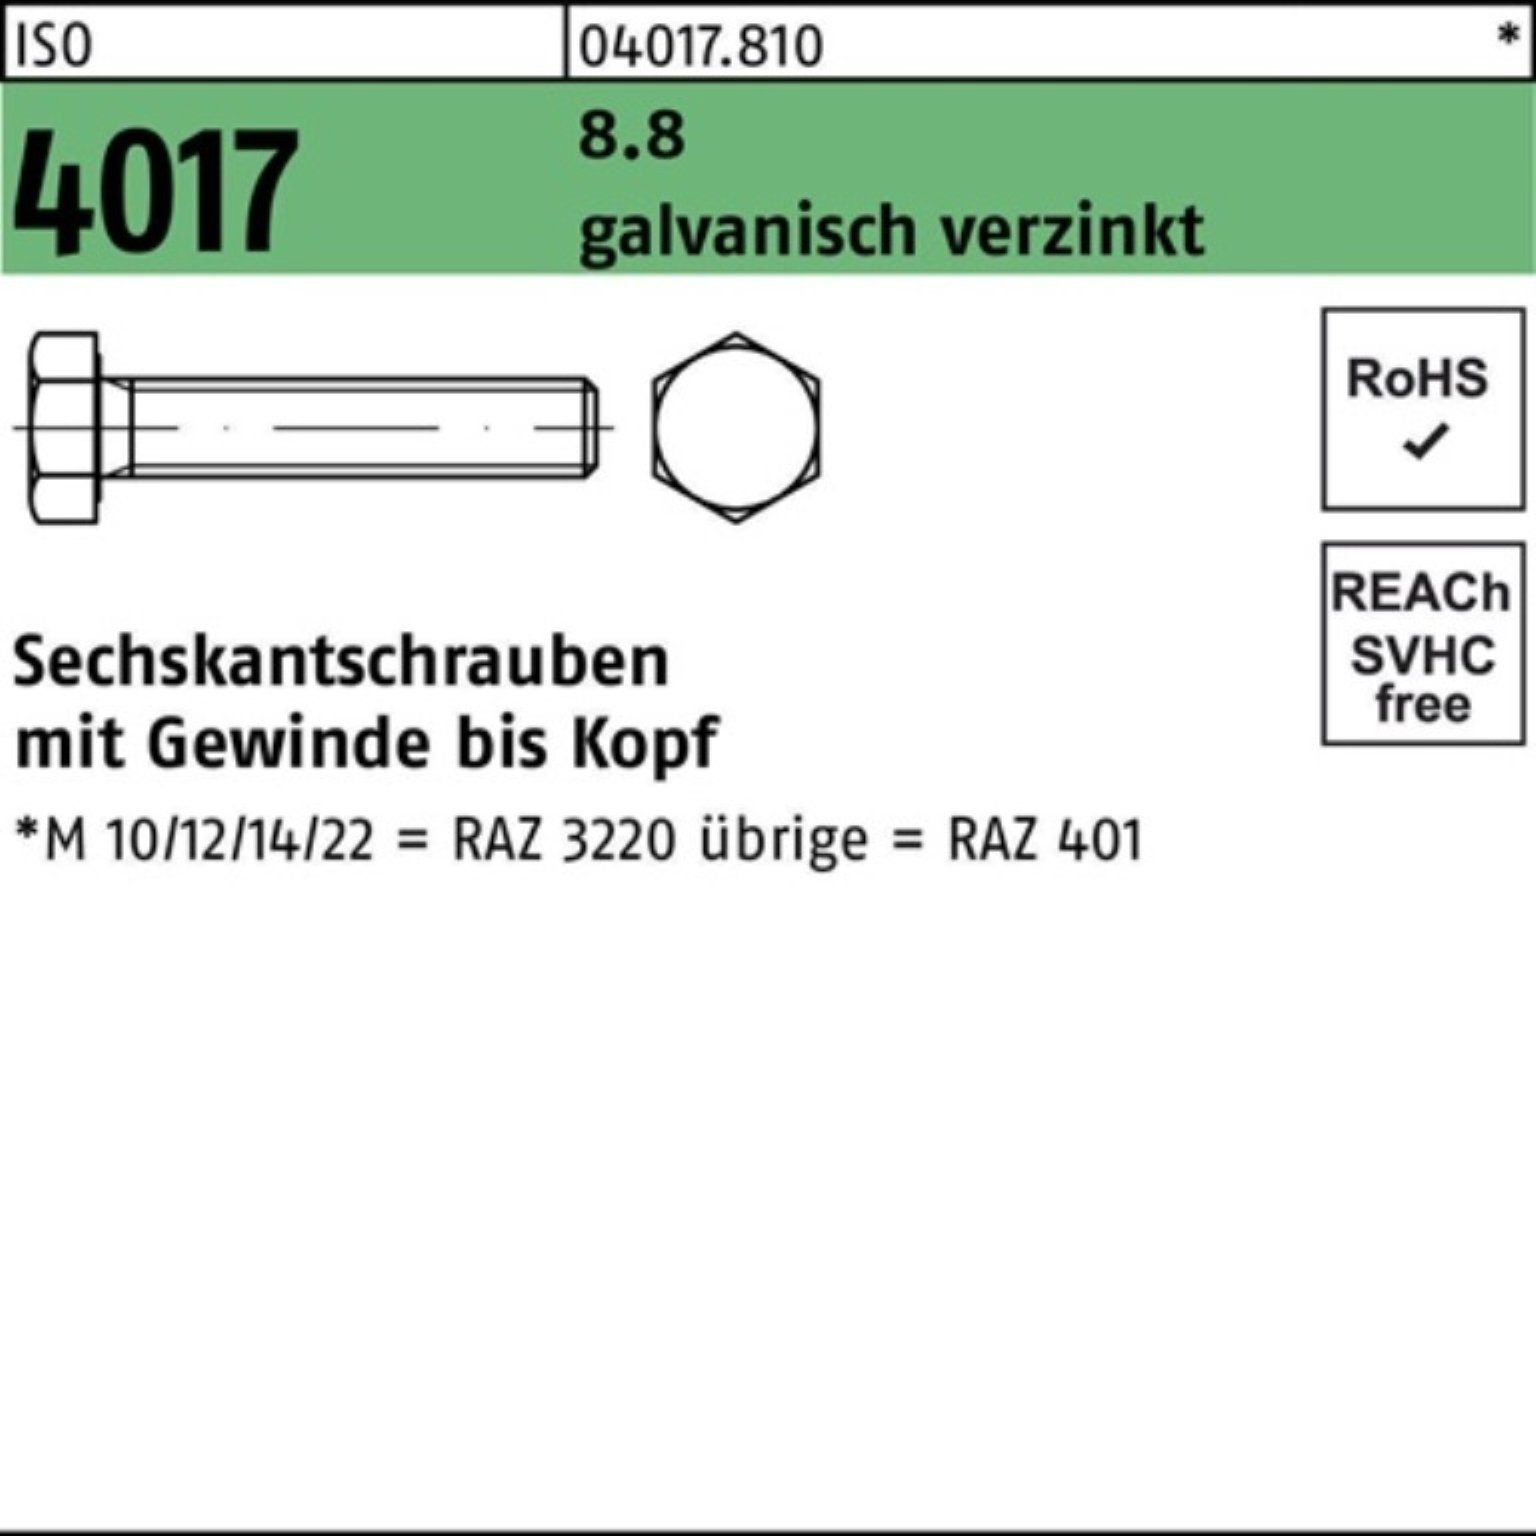 Bufab Sechskantschraube 100er Pack 100 Sechskantschraube 8.8 VG S ISO galv.verz. 4017 M12x 150